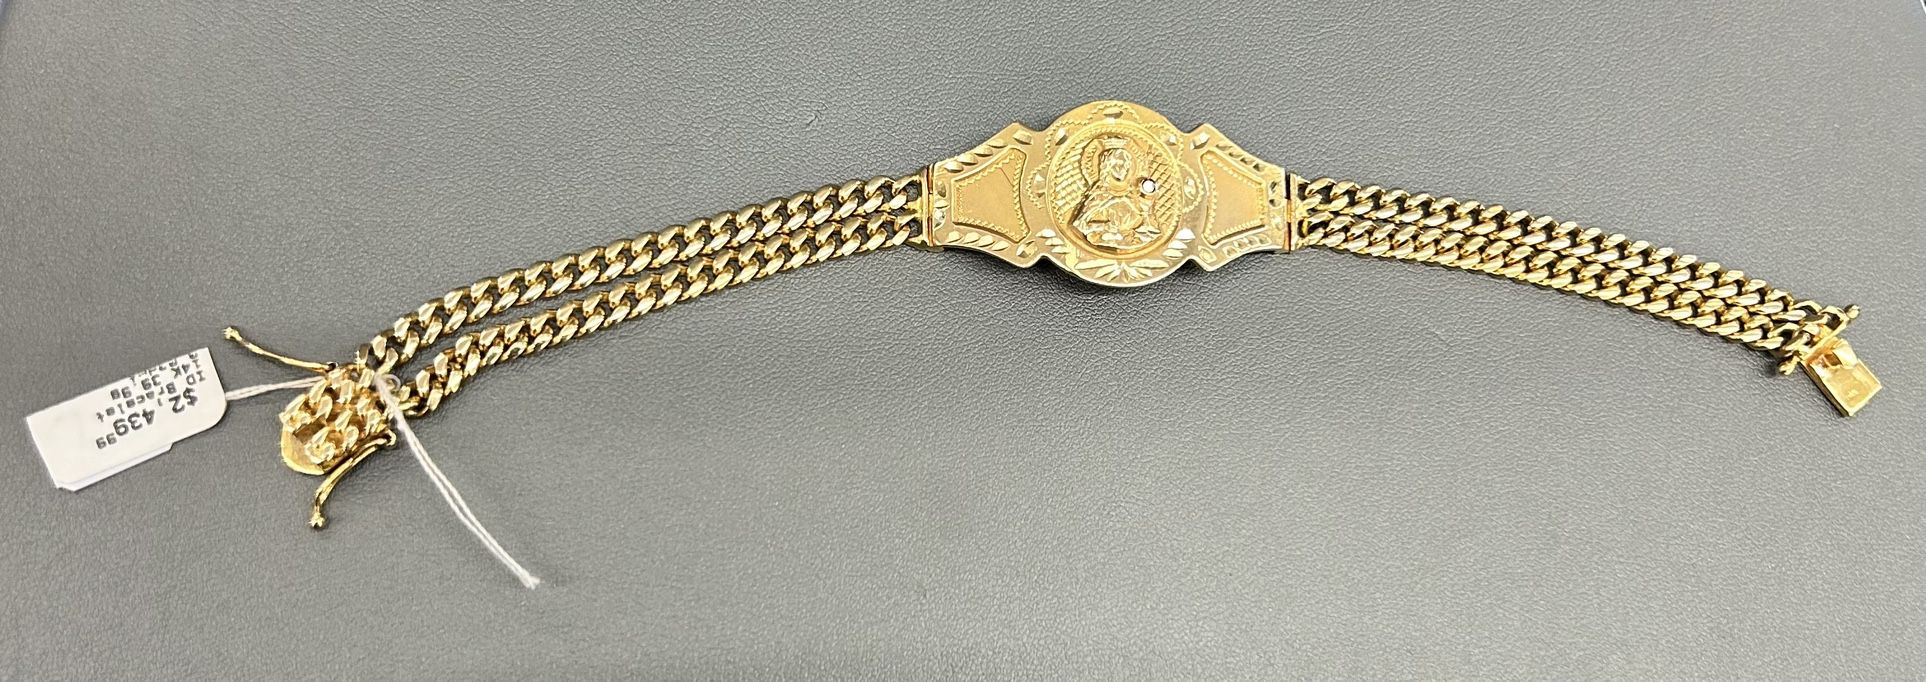 14k Cuban Link Bracelet